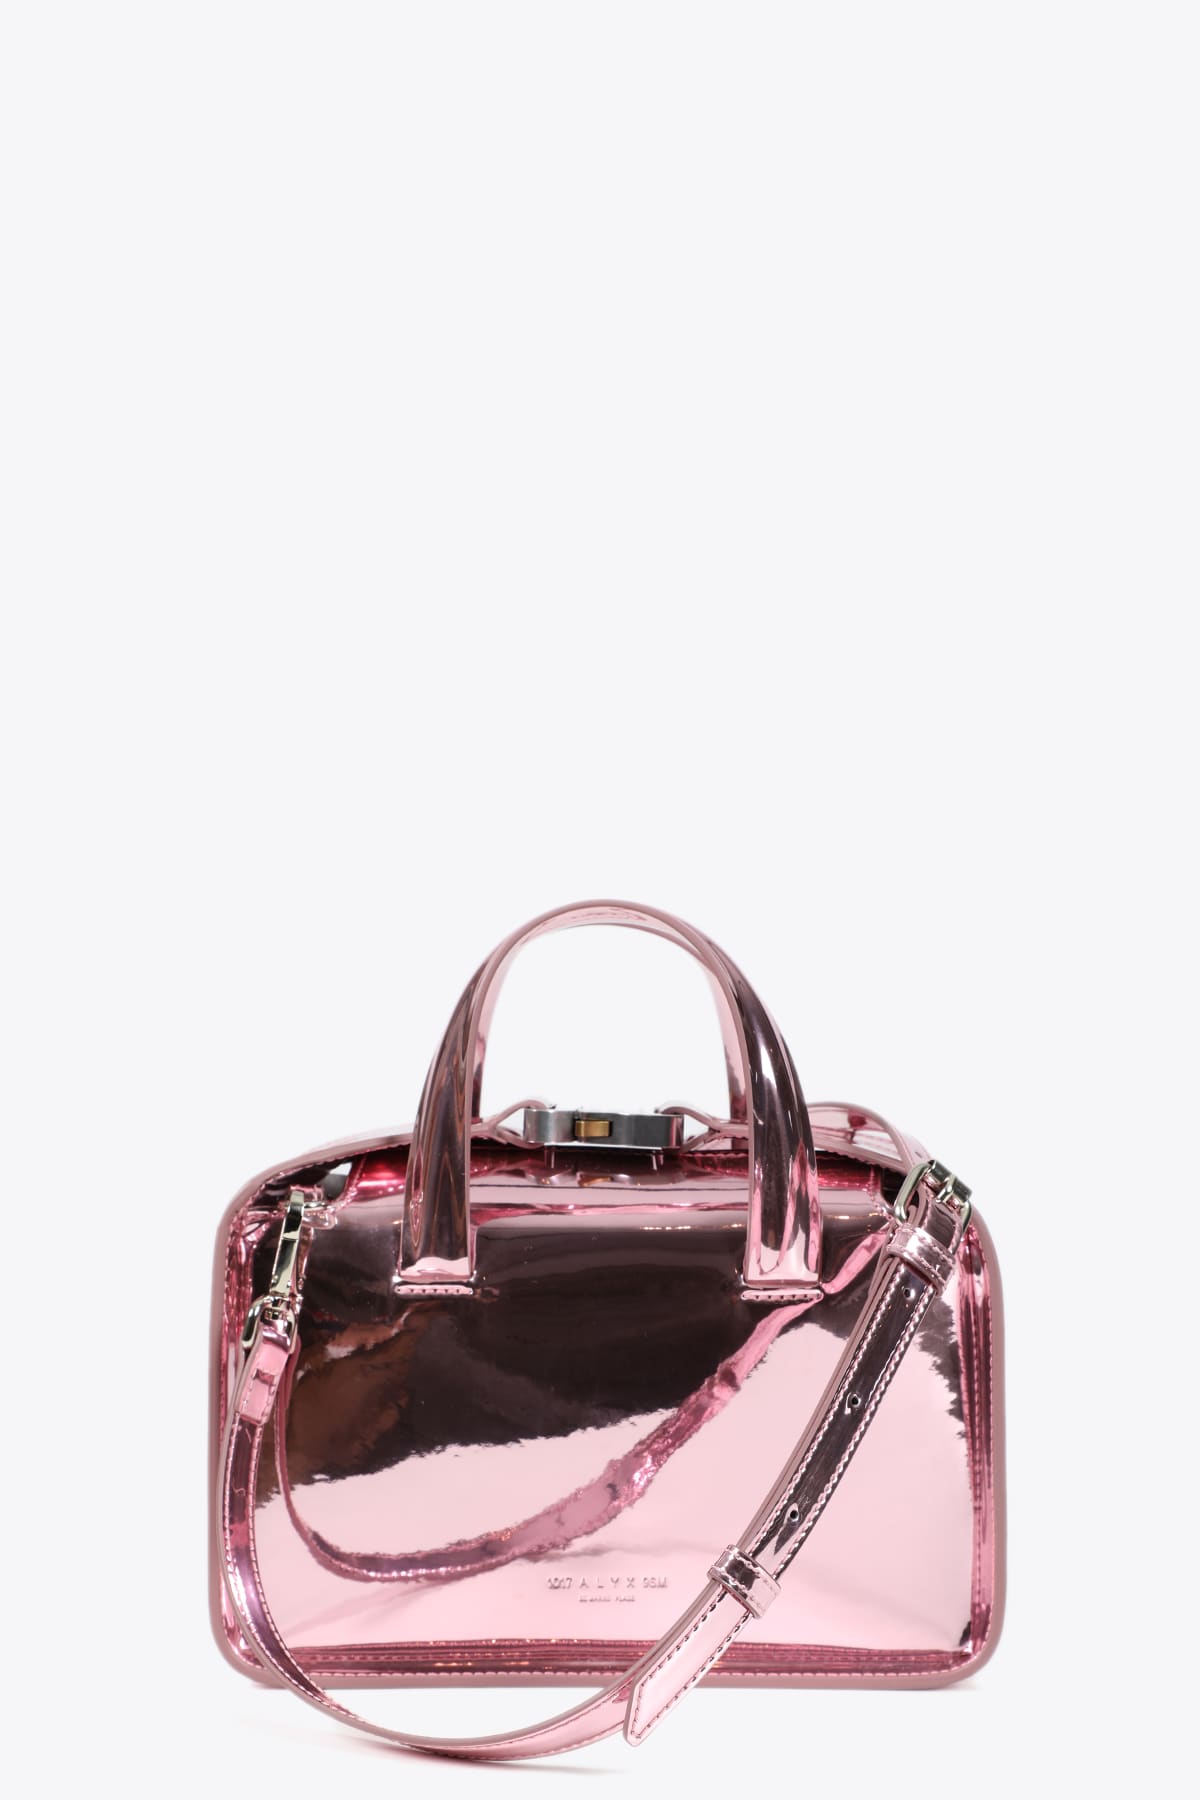 1017 ALYX 9SM Brie Bag Metal pink leather bag - Brie bag